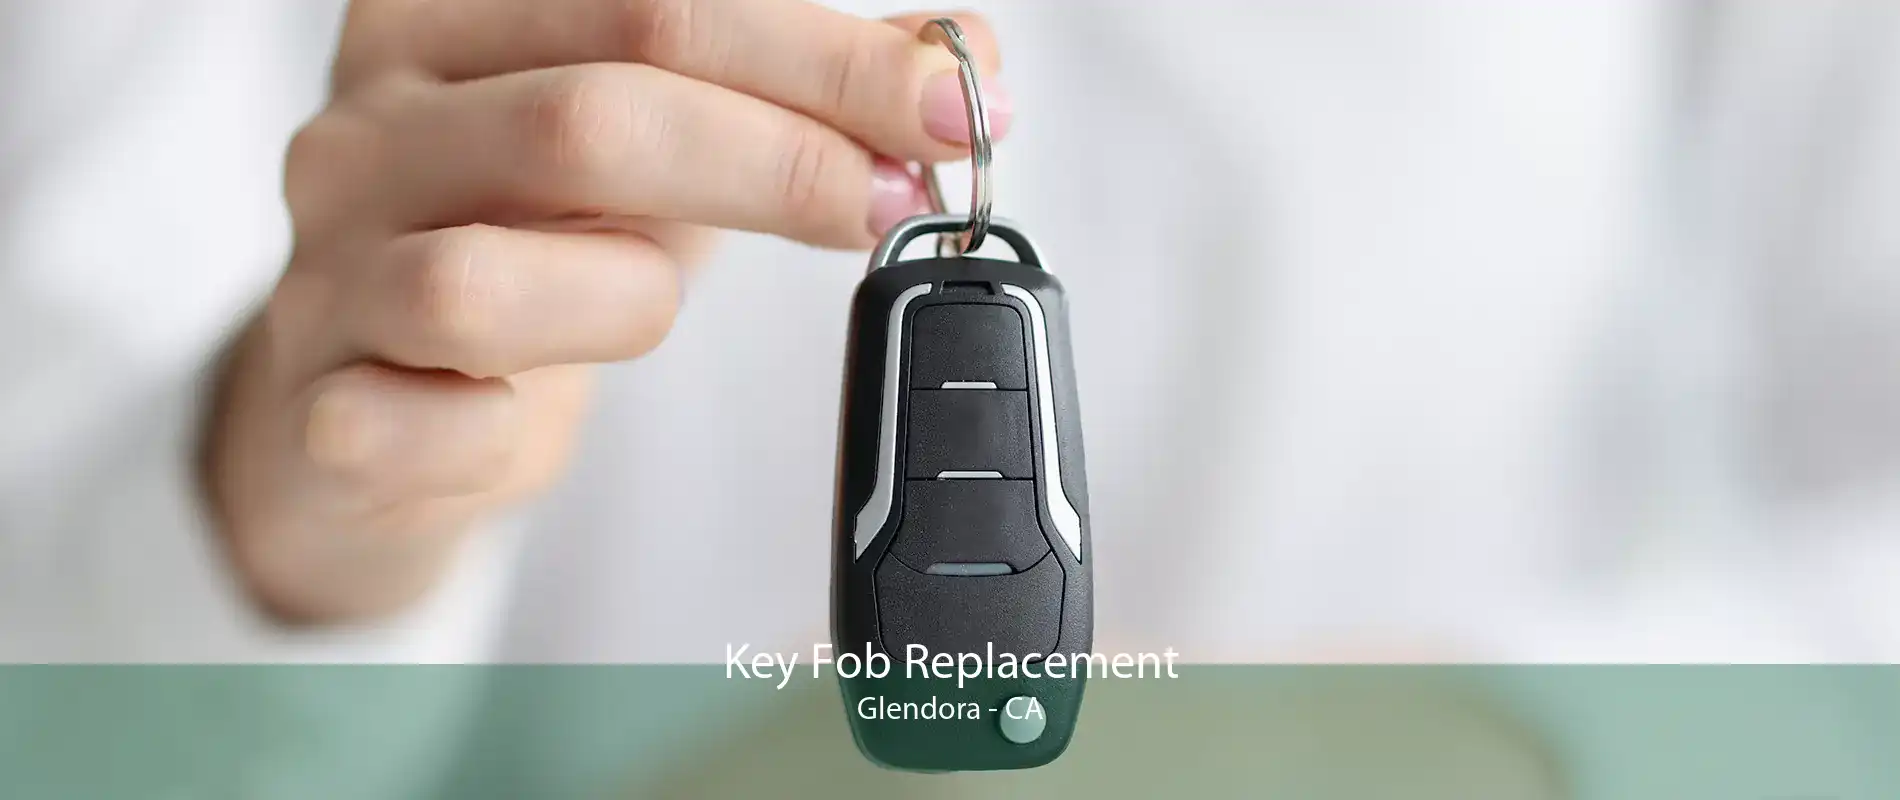 Key Fob Replacement Glendora - CA